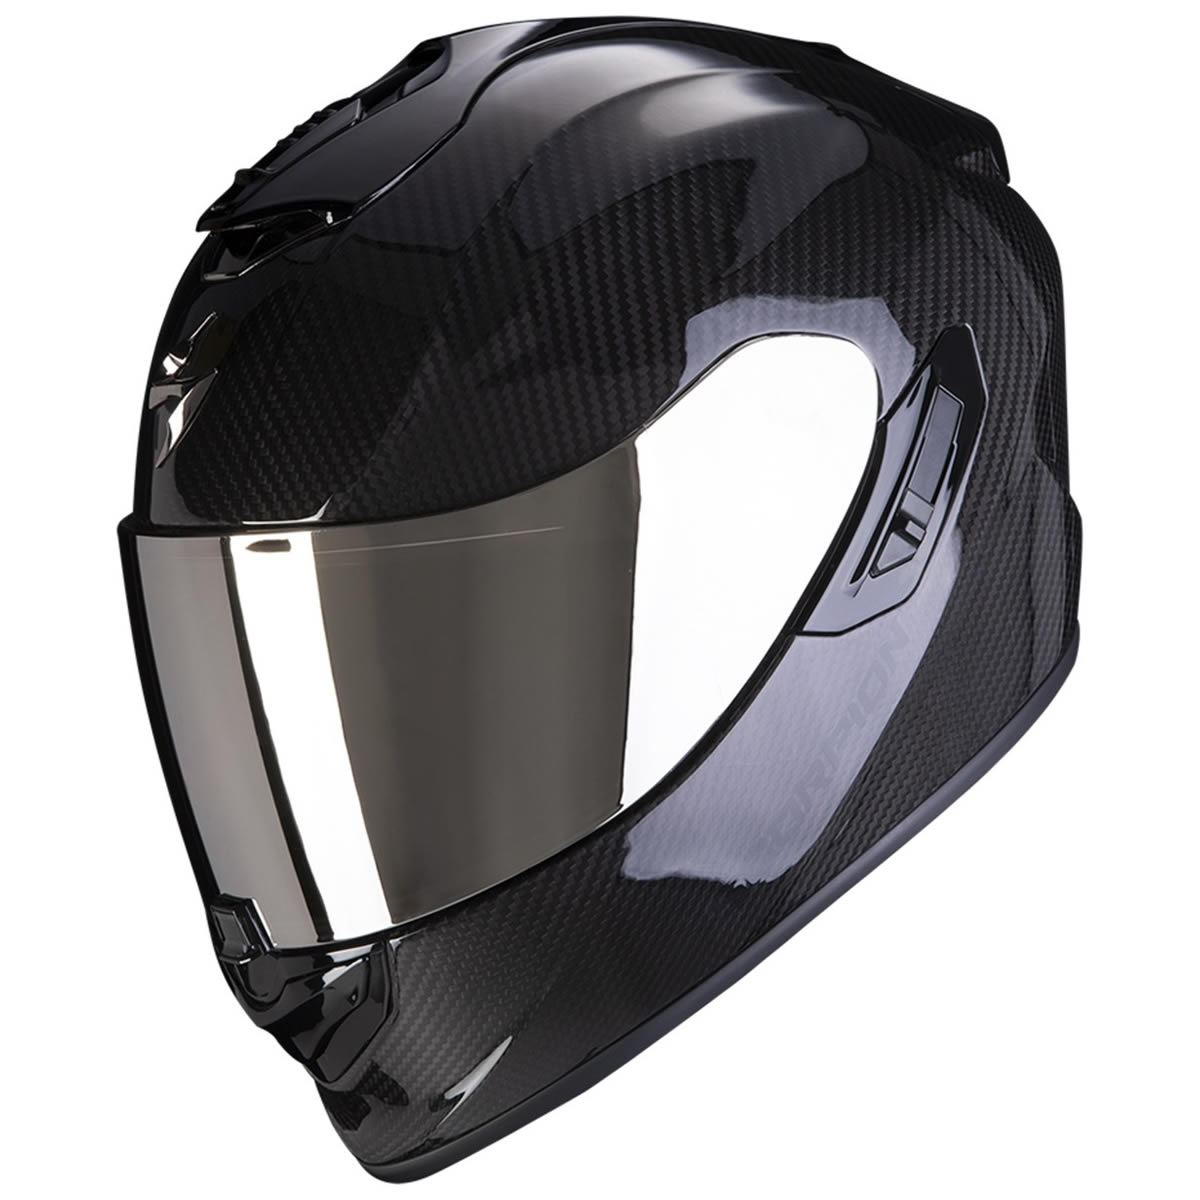 Scorpion EXO-1400 EVO II Carbon Air Solid Helm, schwarz